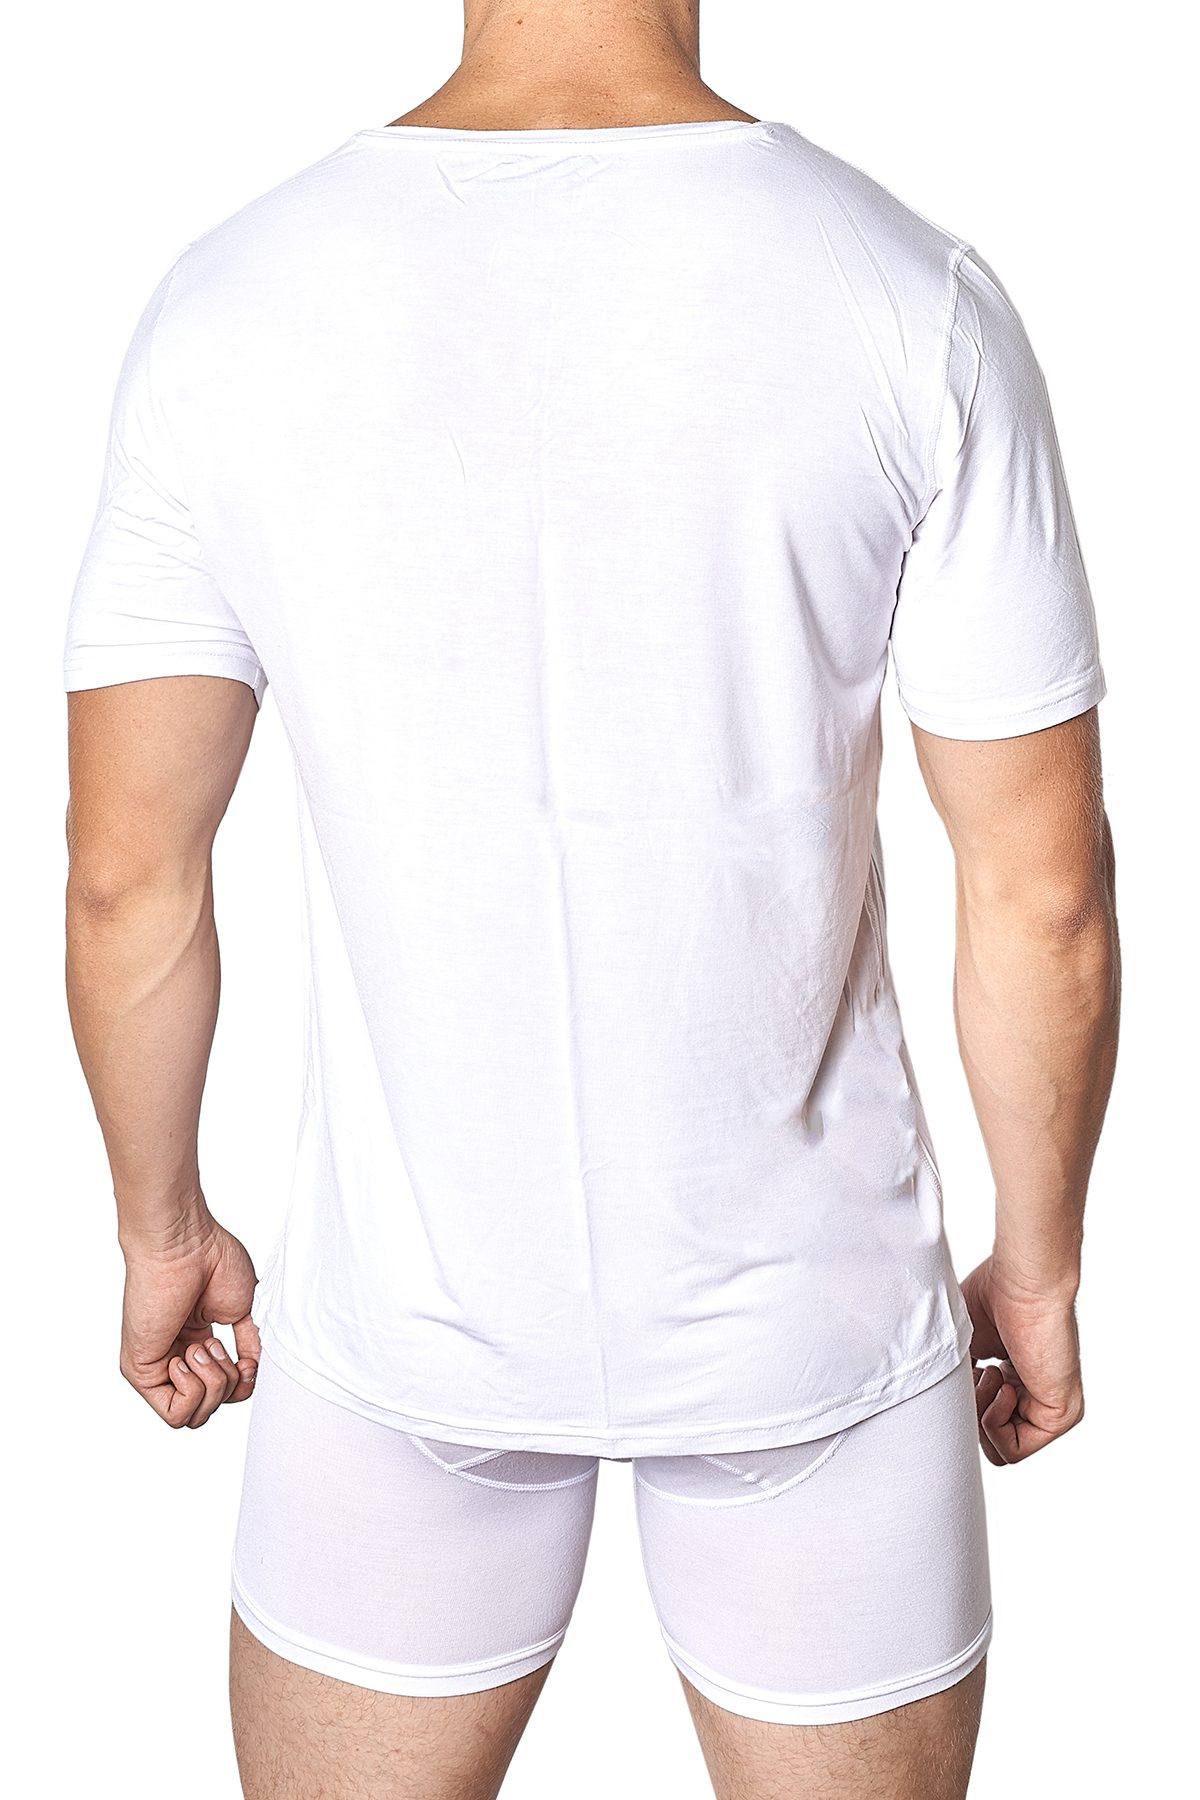 Yocisco's White Essentials V-Neck Shirt